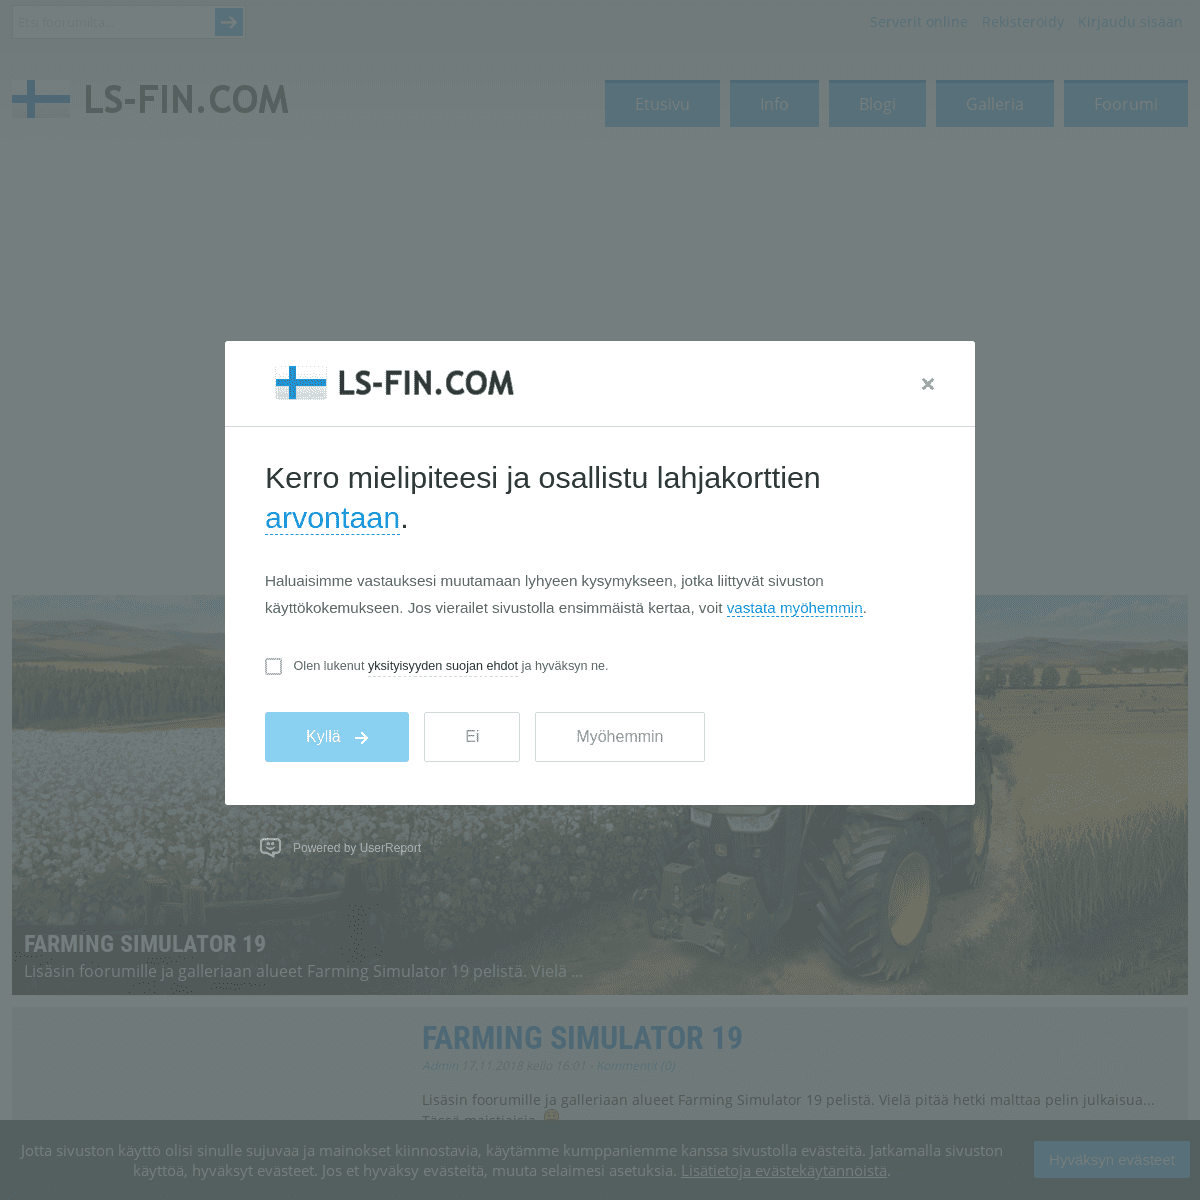 A complete backup of ls-fin.com